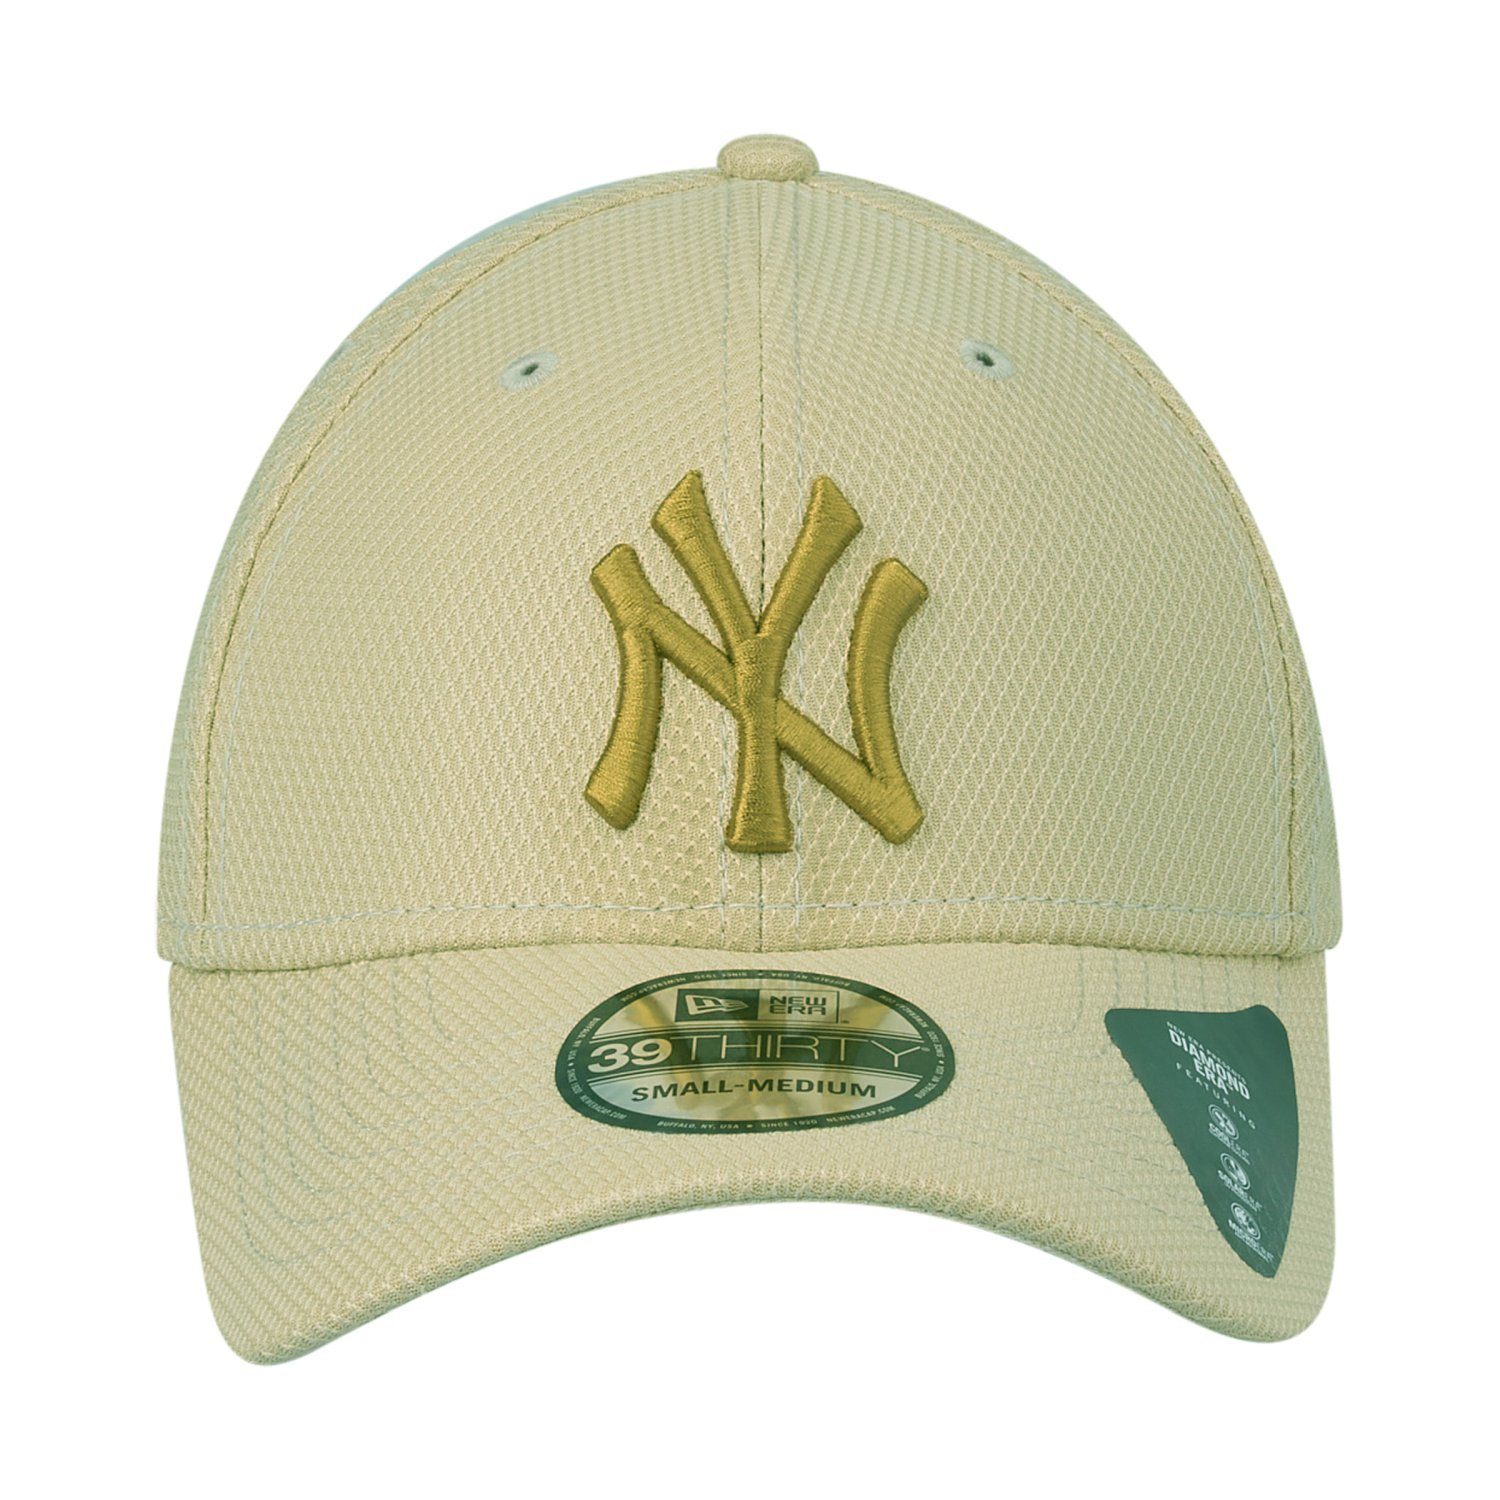 Cap New DIAMOND New Era Yankees York 39Thirty Gold Flex StretchFit